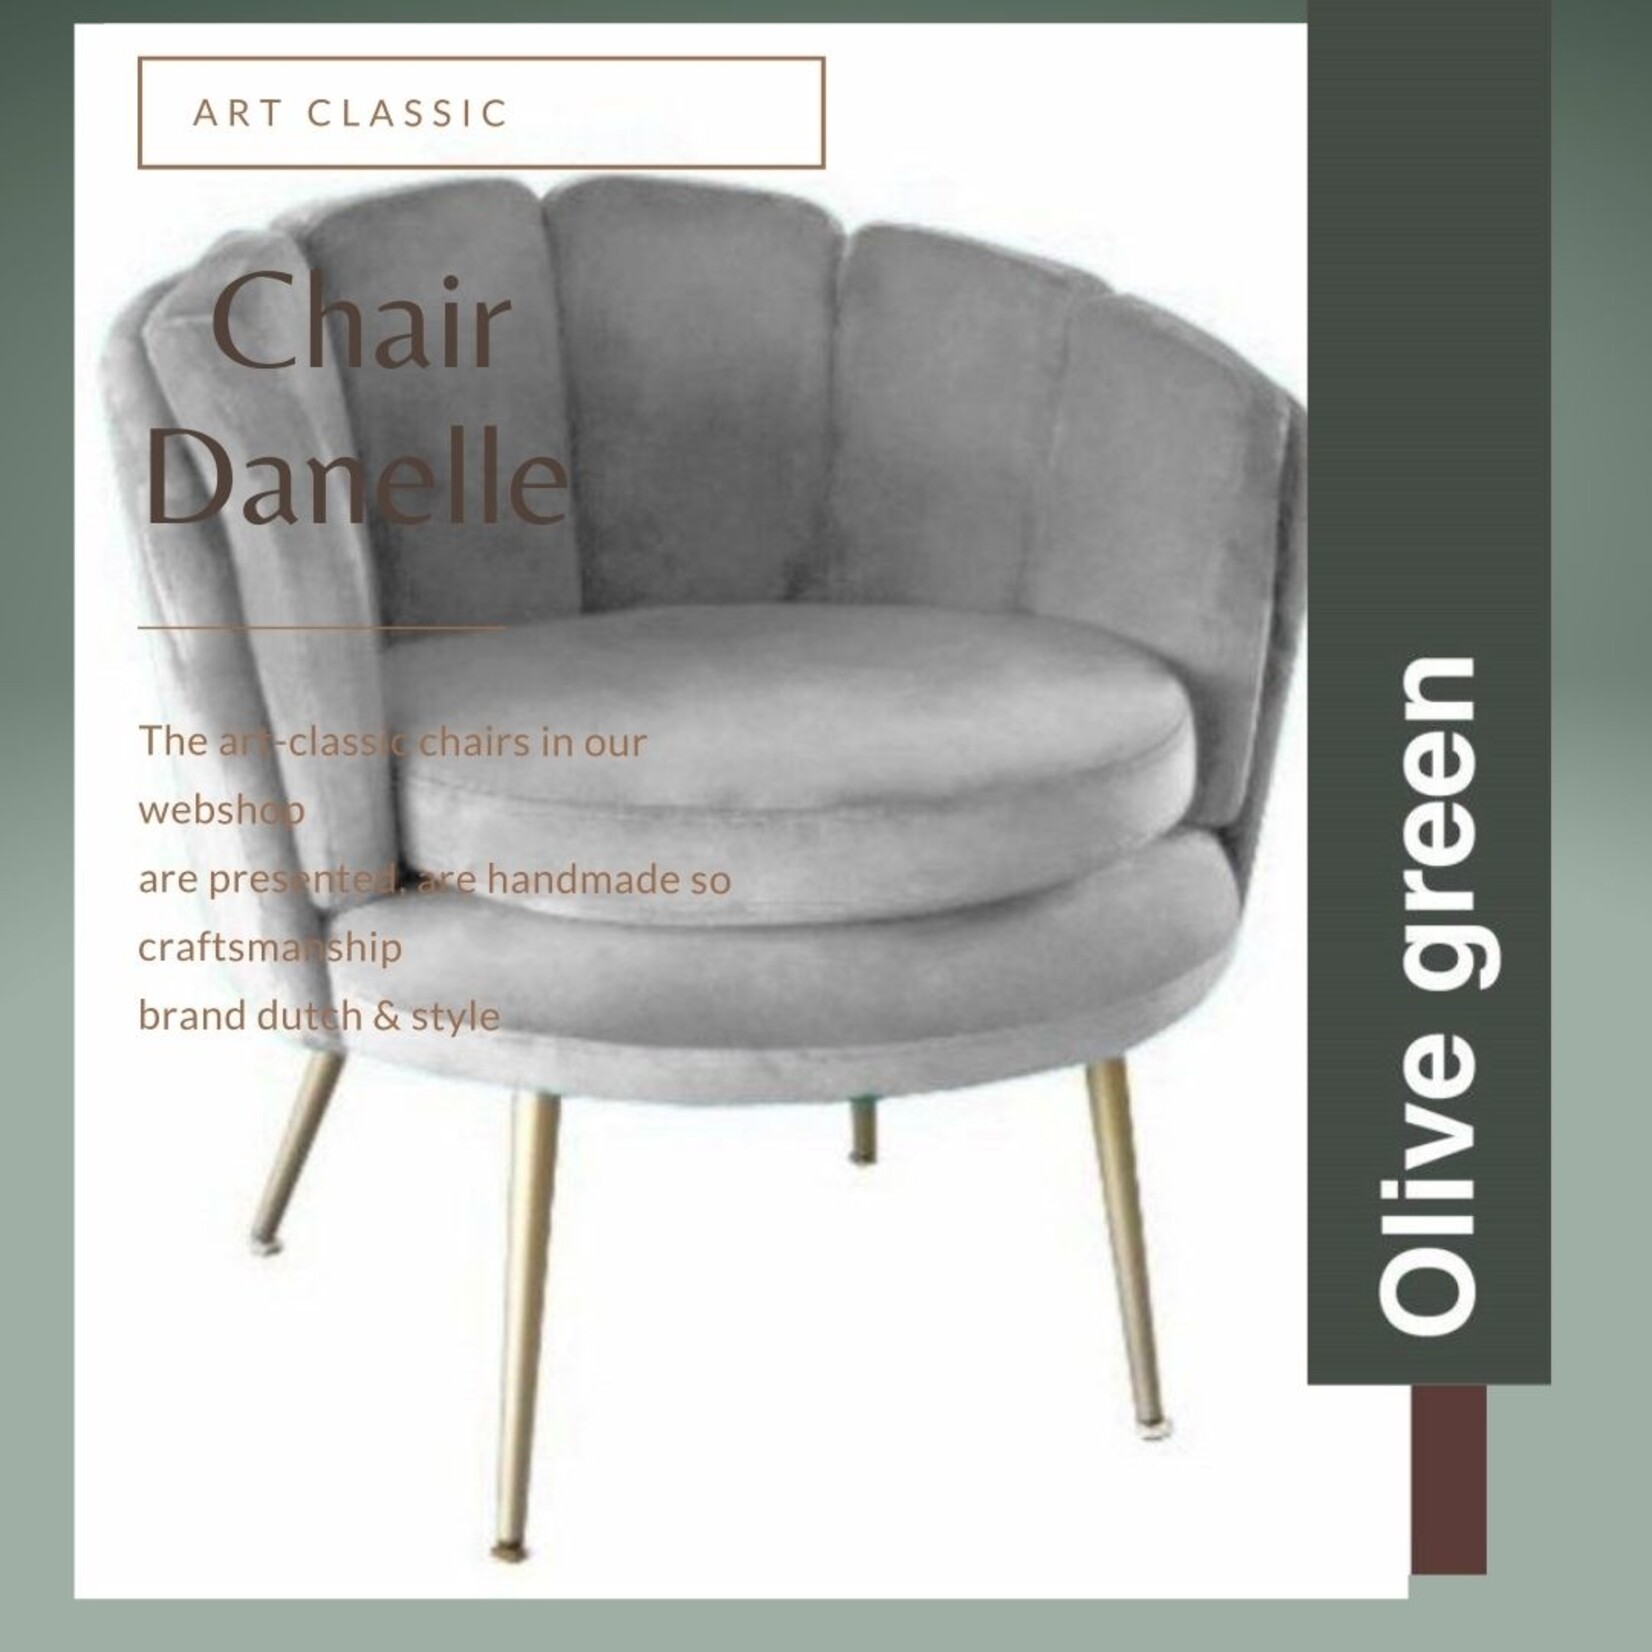 Dutch & Style Chair Danelle